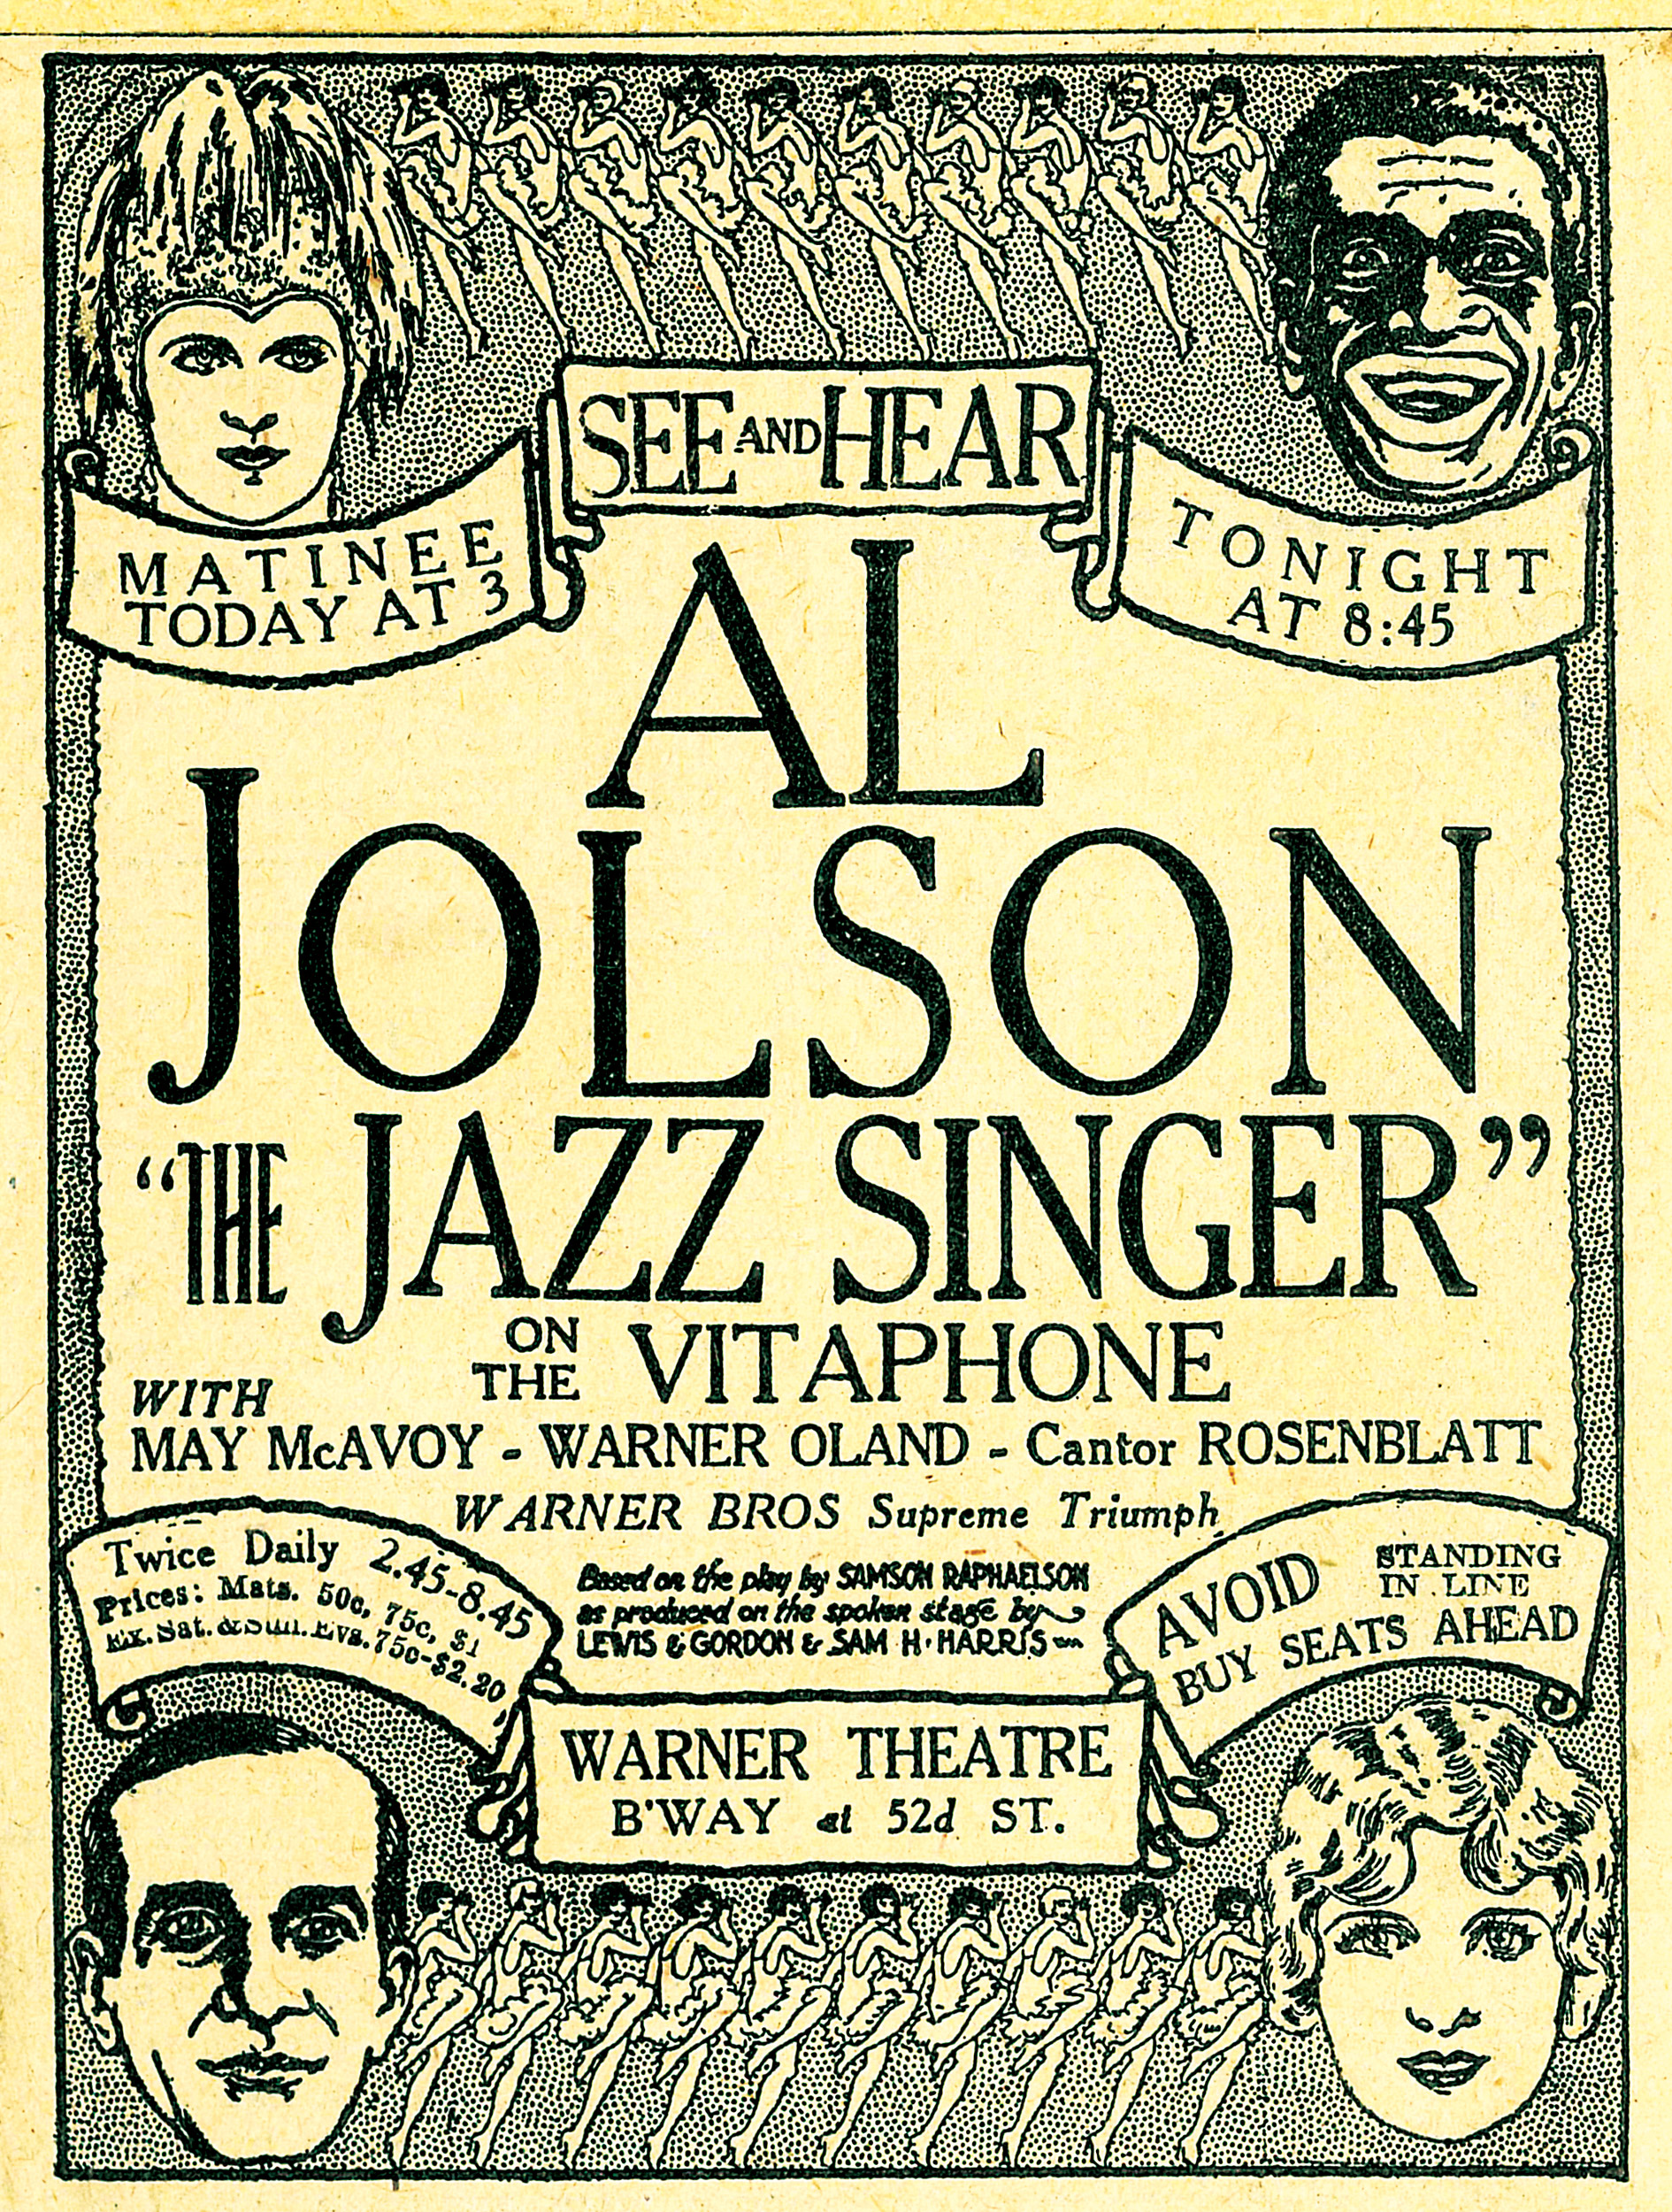 The Jazz Singer newspaper advertisement, 1927.